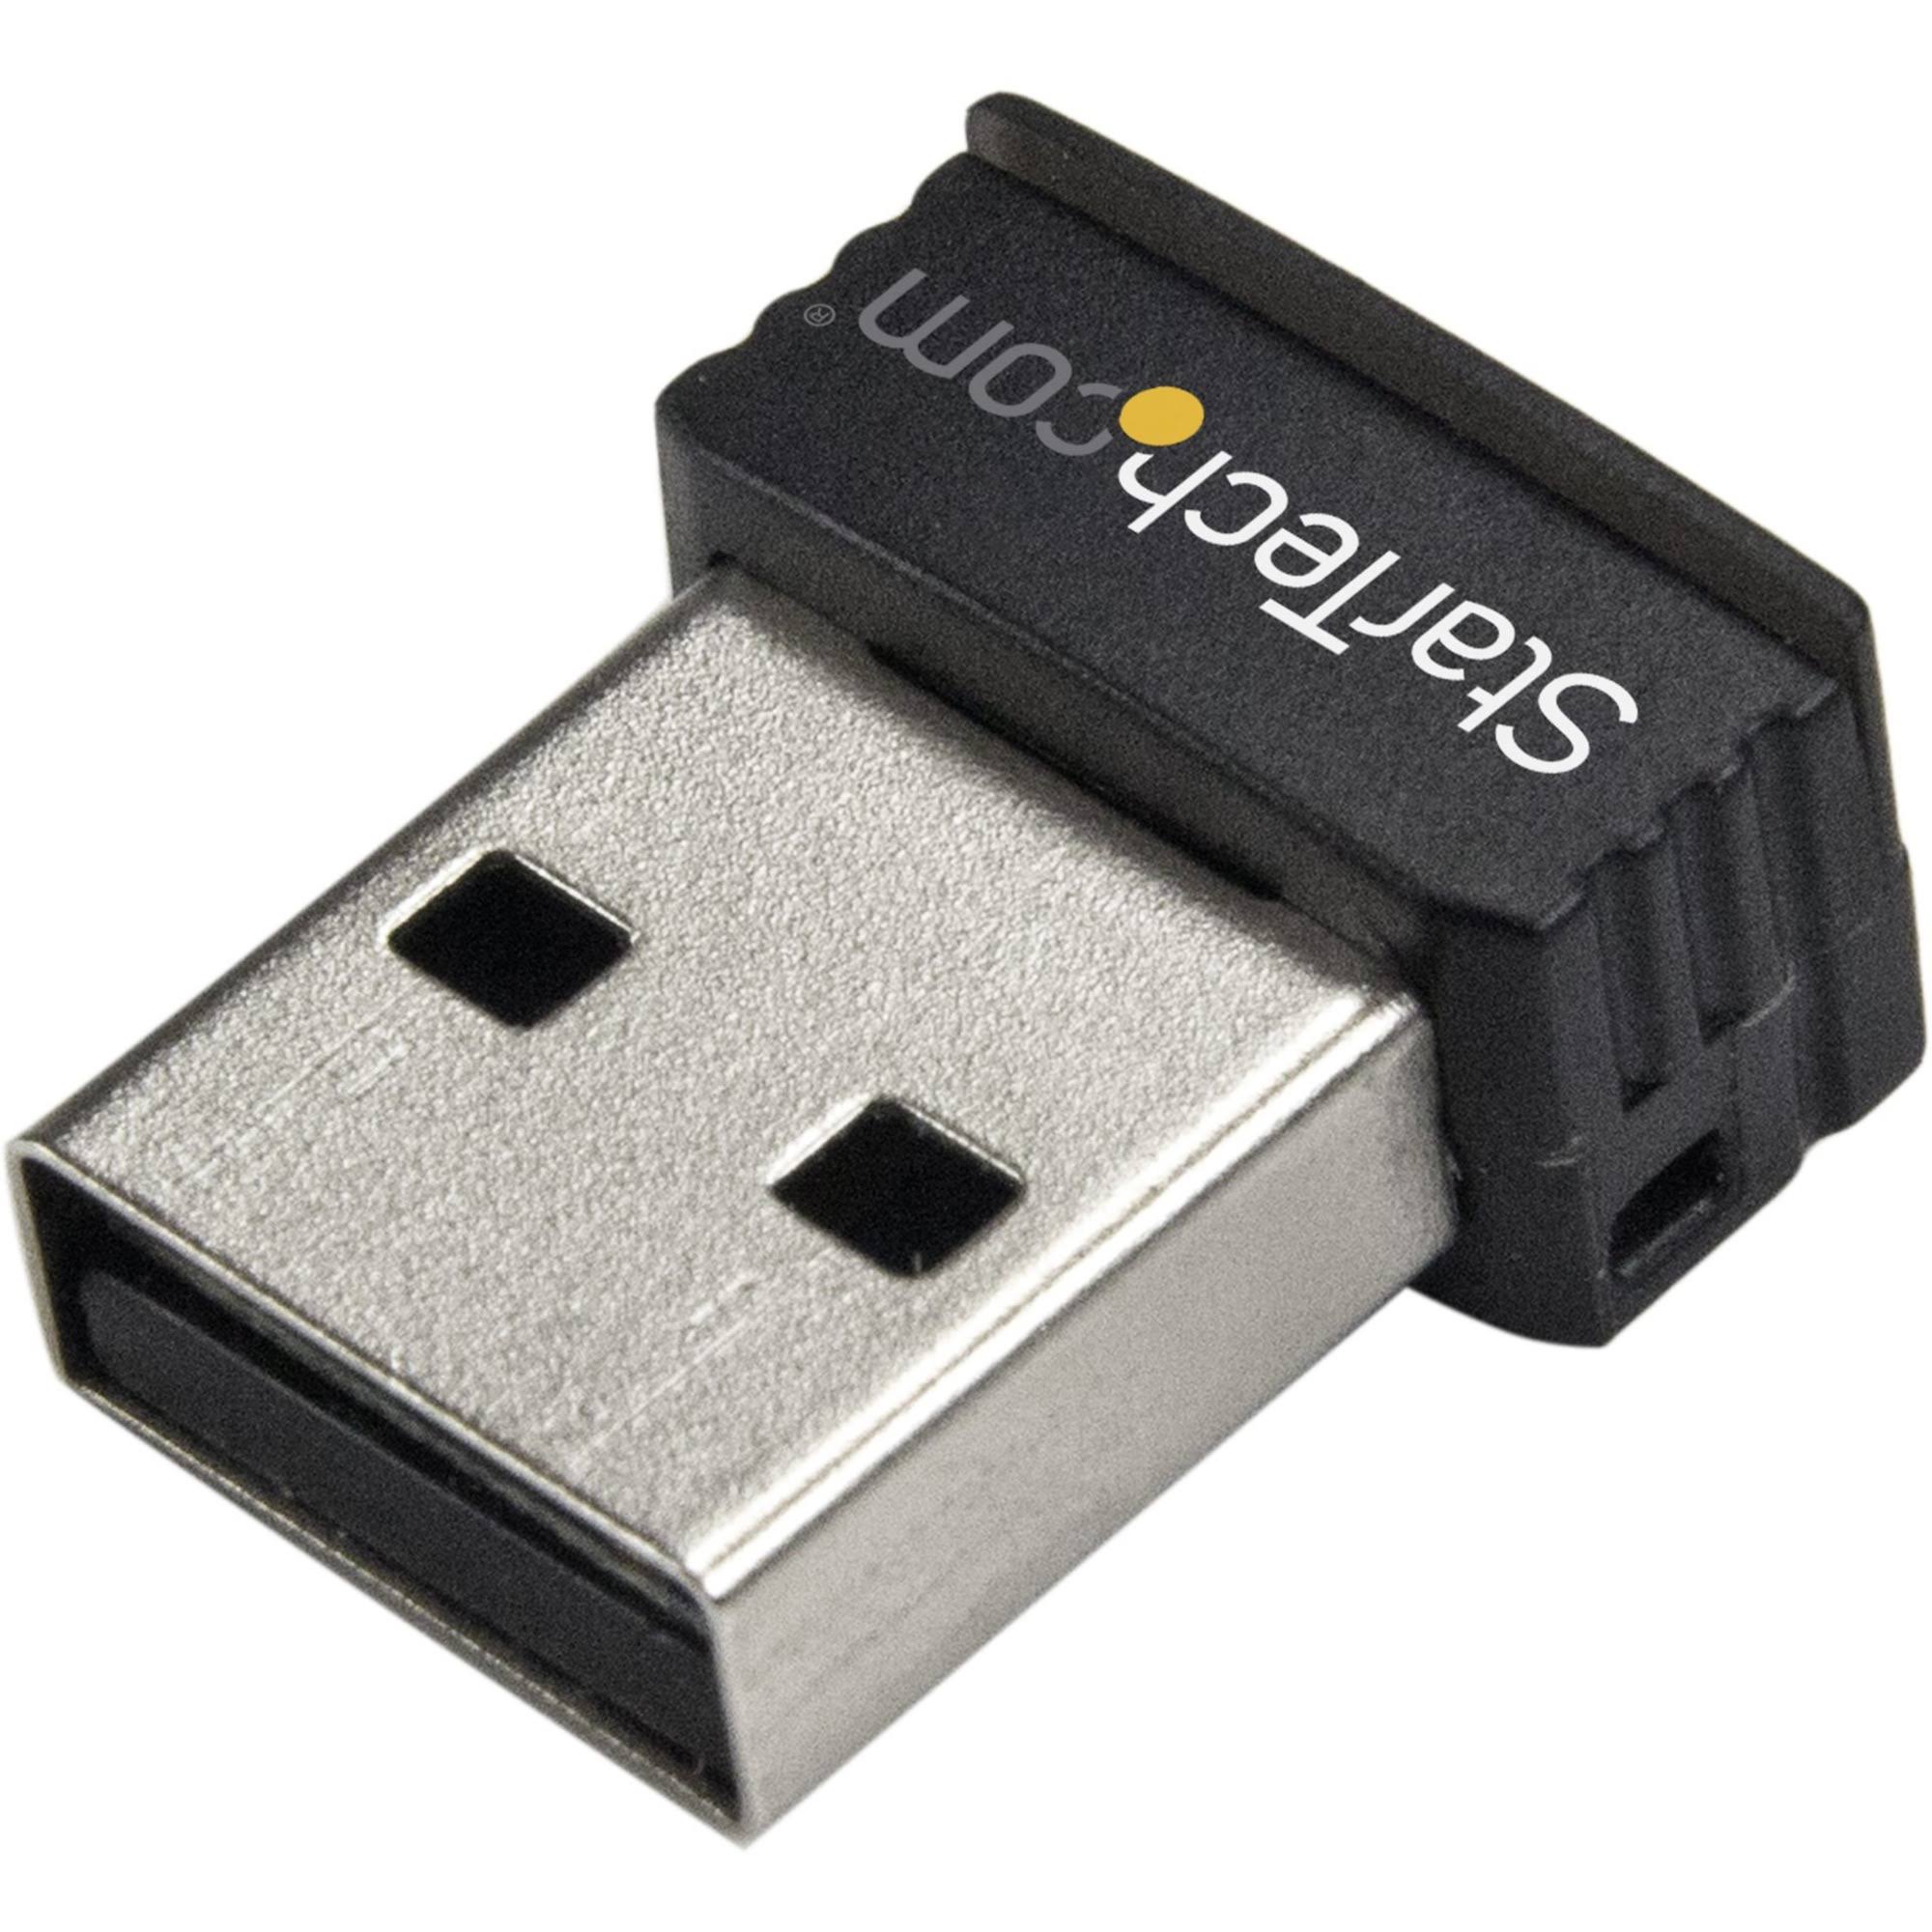 StarTech.com USB Mini Wireless N Network Adapter - 802.11n/g 1T1R, 150Mbps